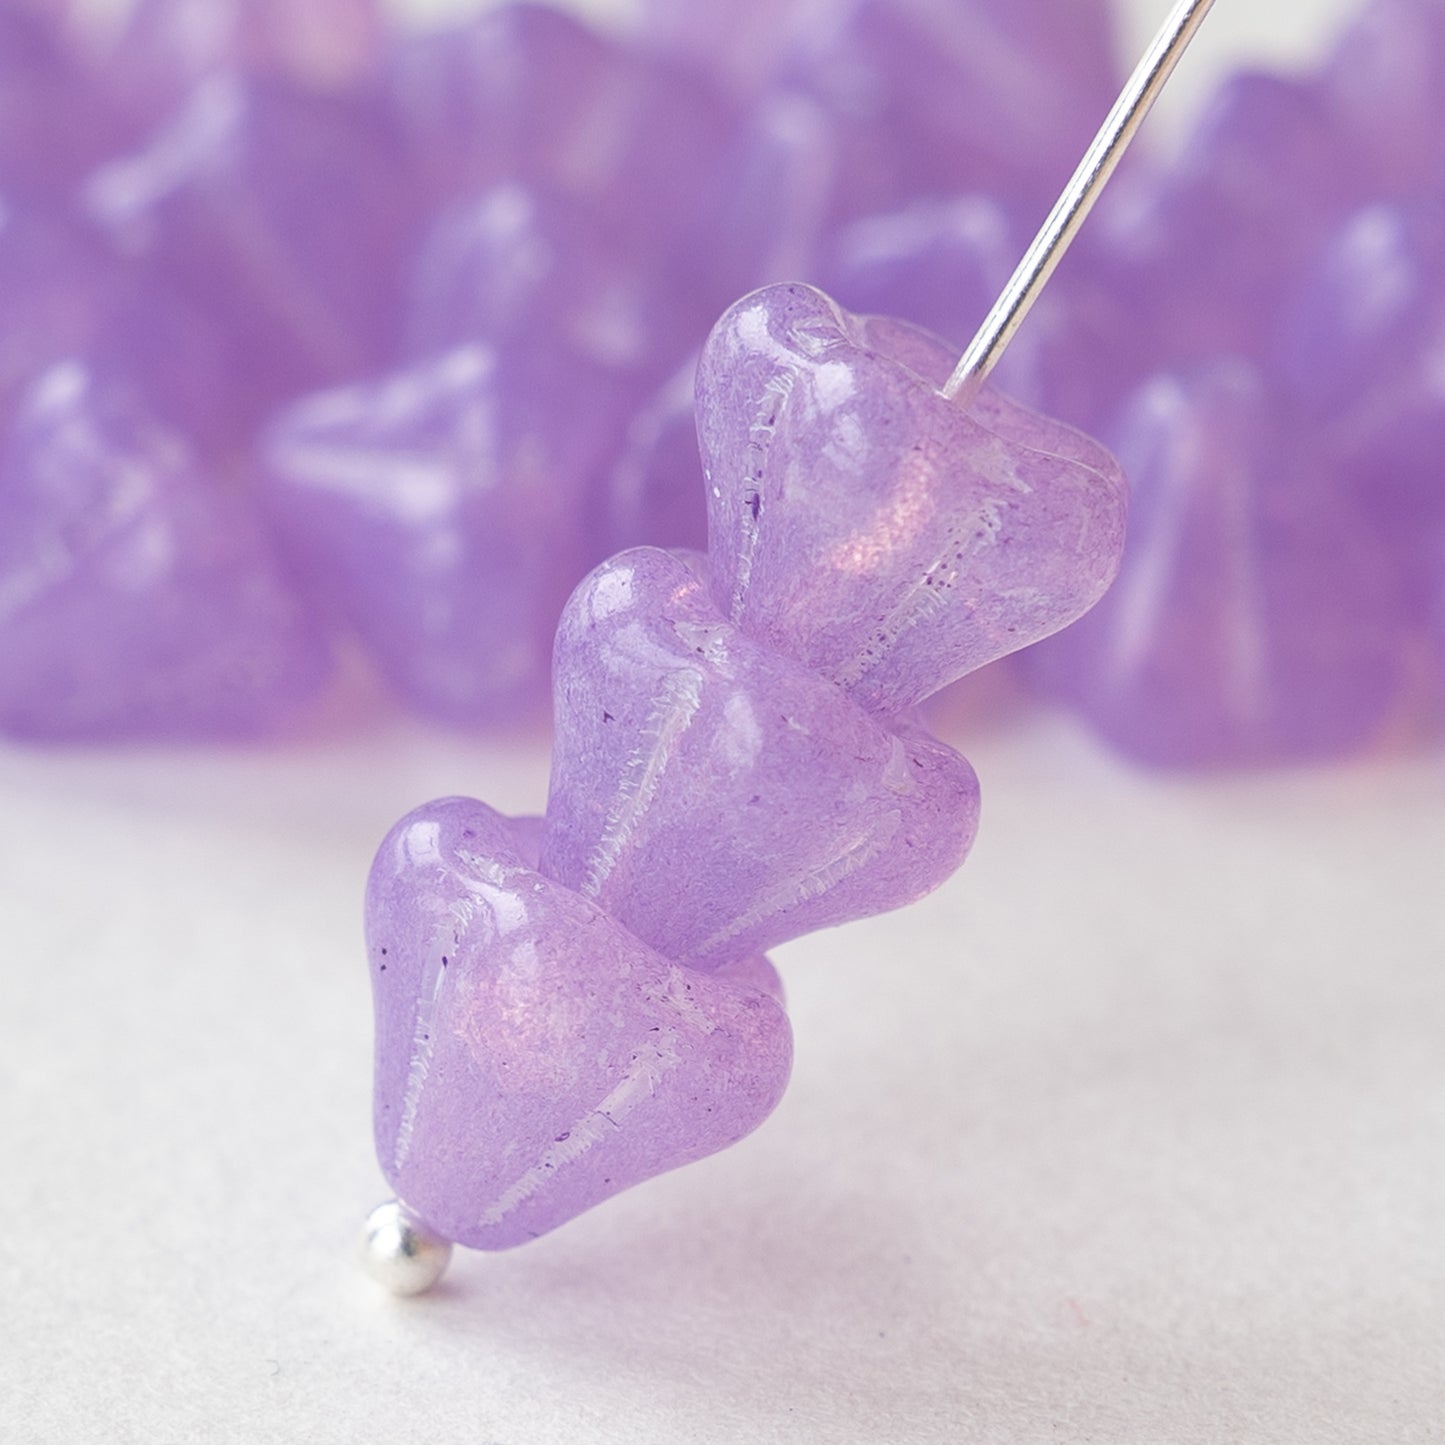 10mm Bell Flower Beads - Lavender Opaline - 20 Beads